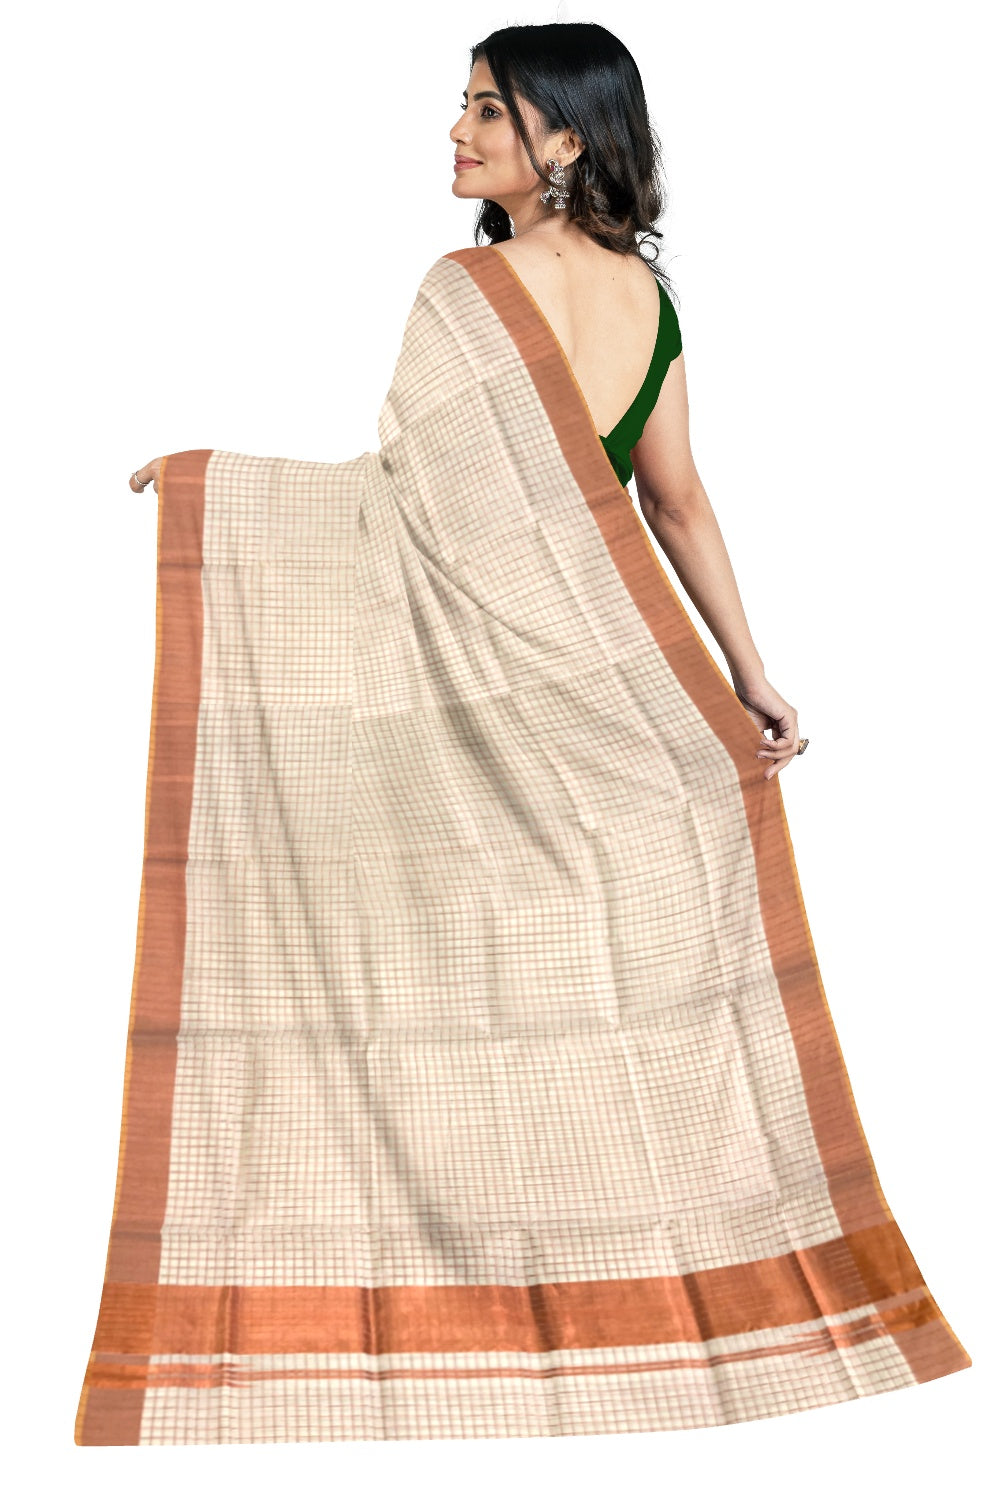 Southloom™ Handloom Kerala Premium Saree with Copper Kasavu Check Design Body